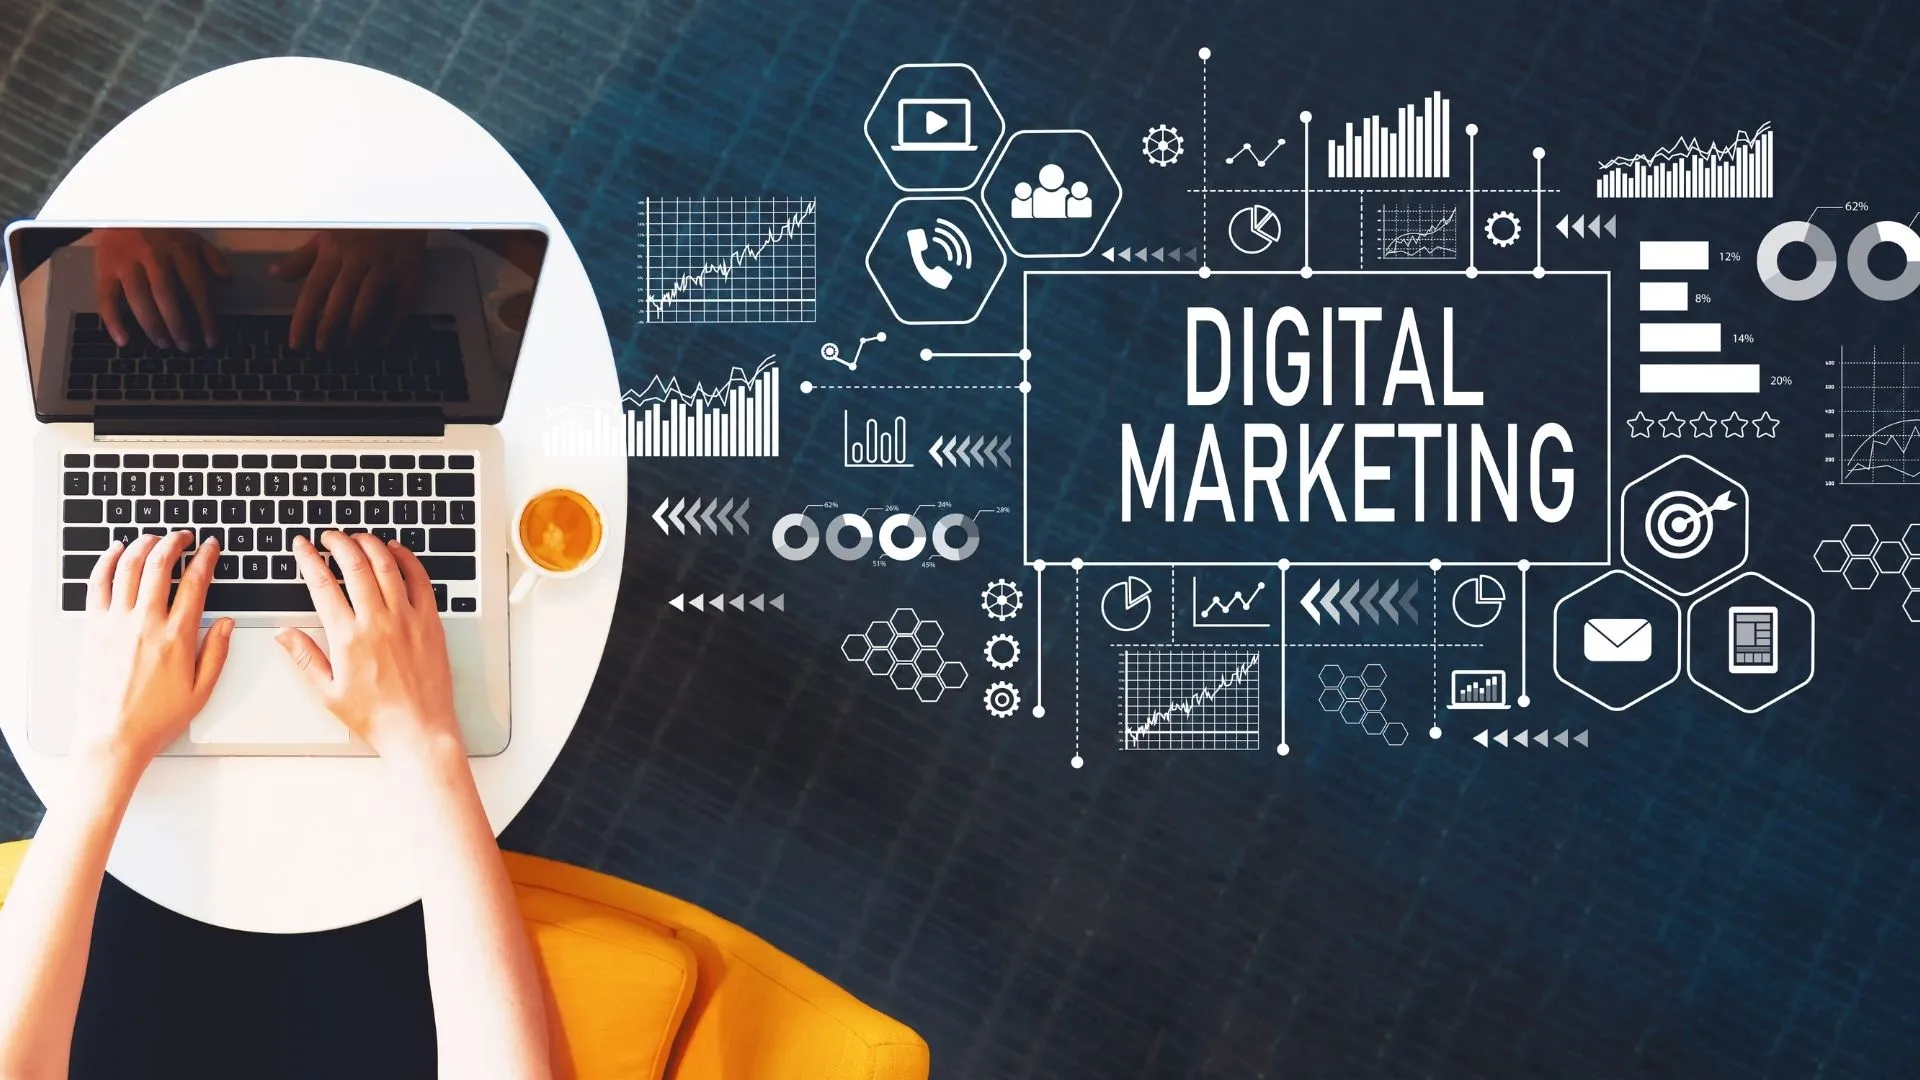 Digital Marketing By Tecswan